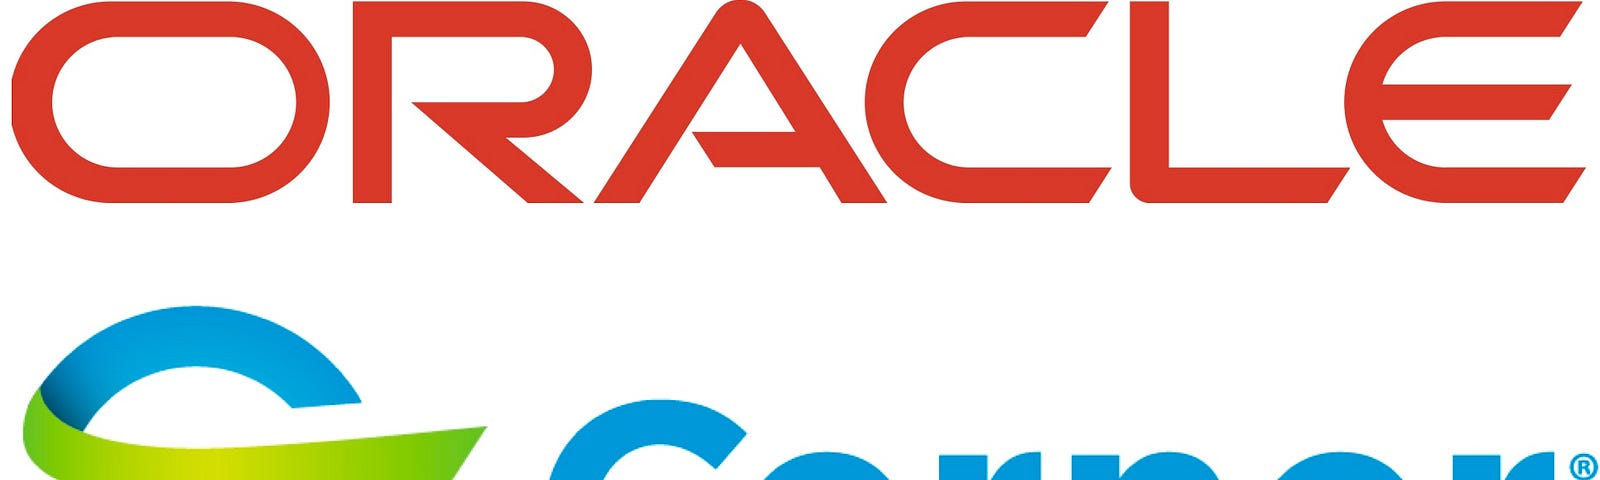 IMAGE: Oracle and Cerner logos